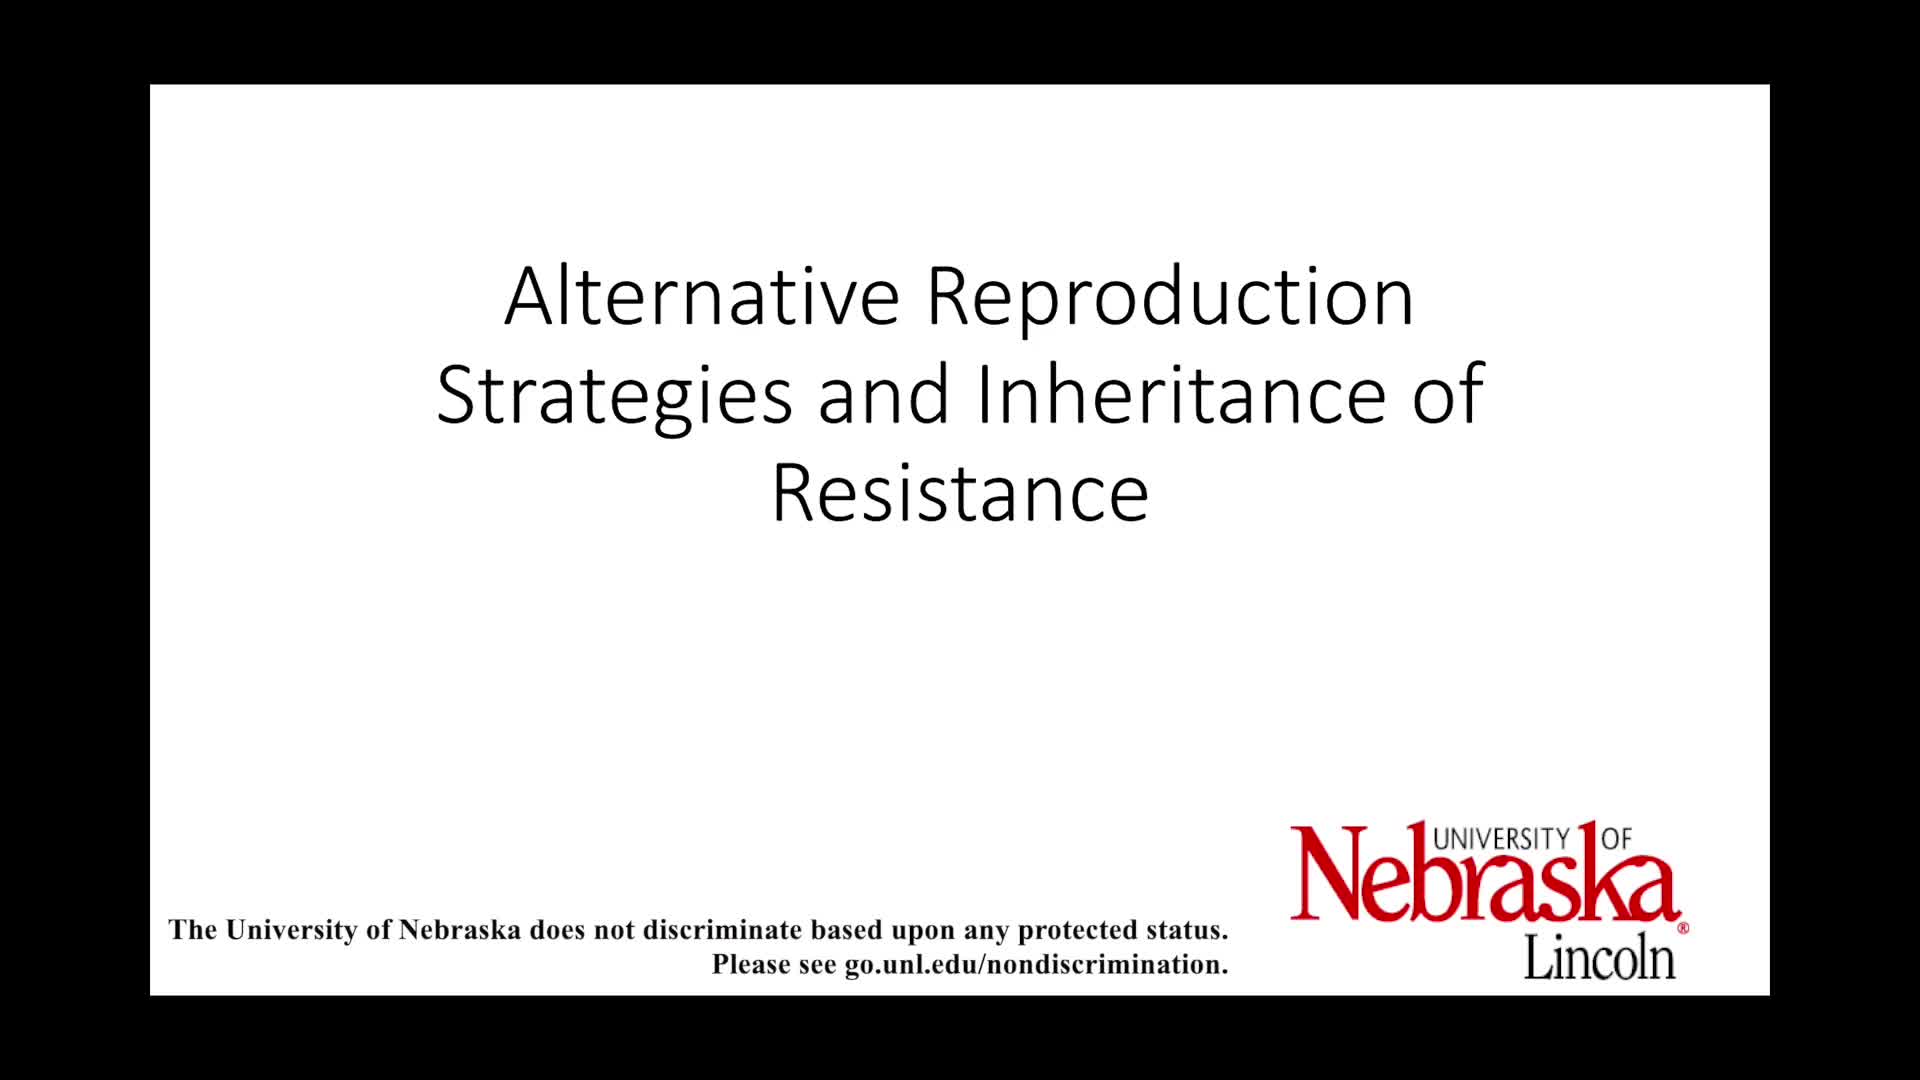 Alternate Methods of Reproduction